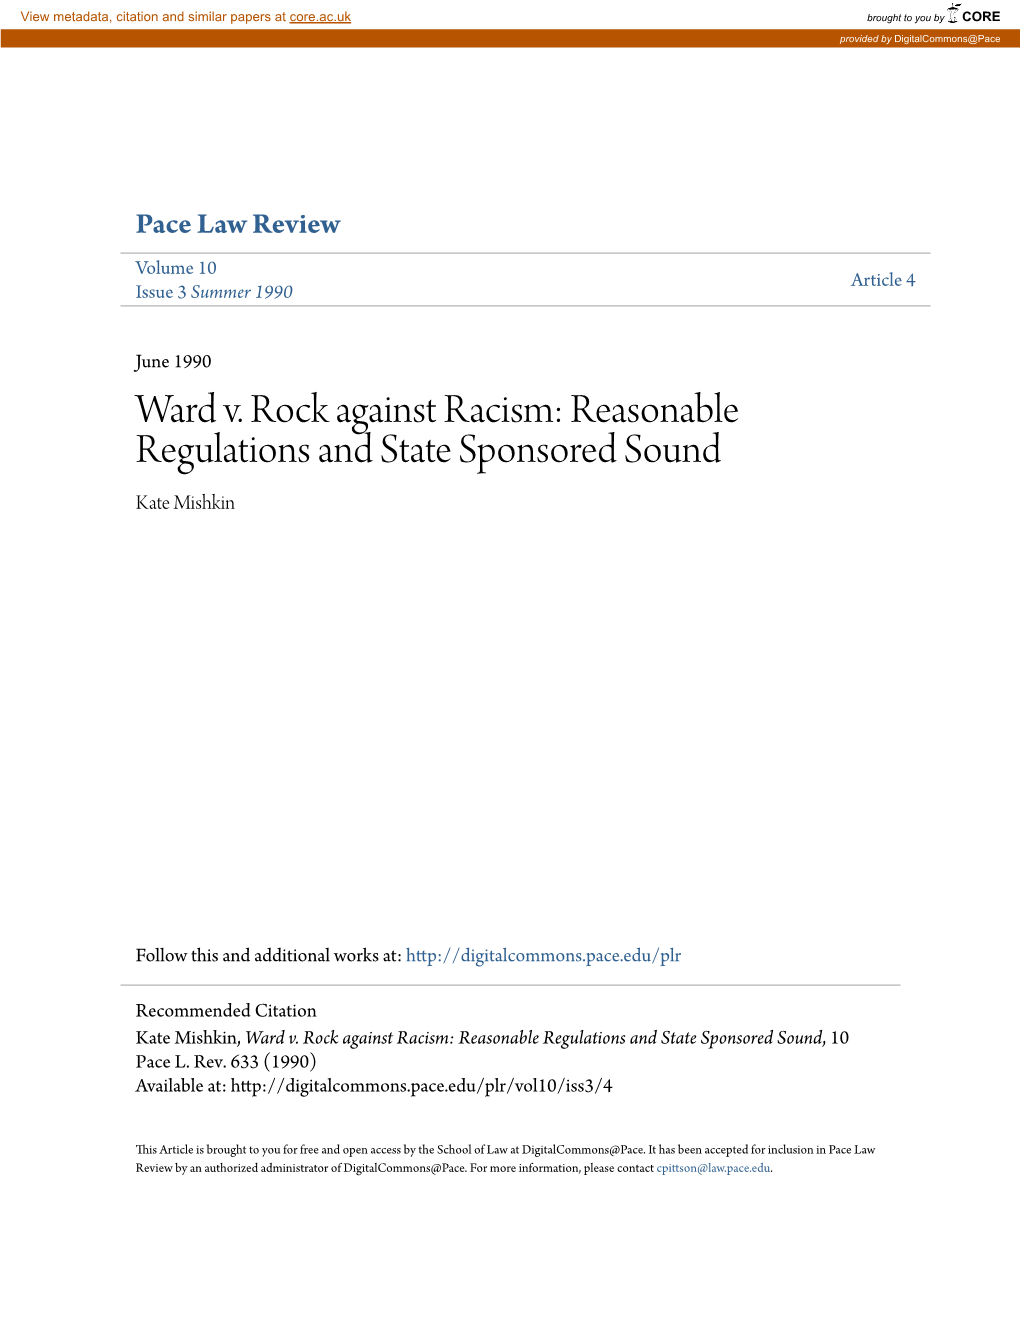 Ward V. Rock Against Racism: Reasonable Regulations and State Sponsored Sound Kate Mishkin